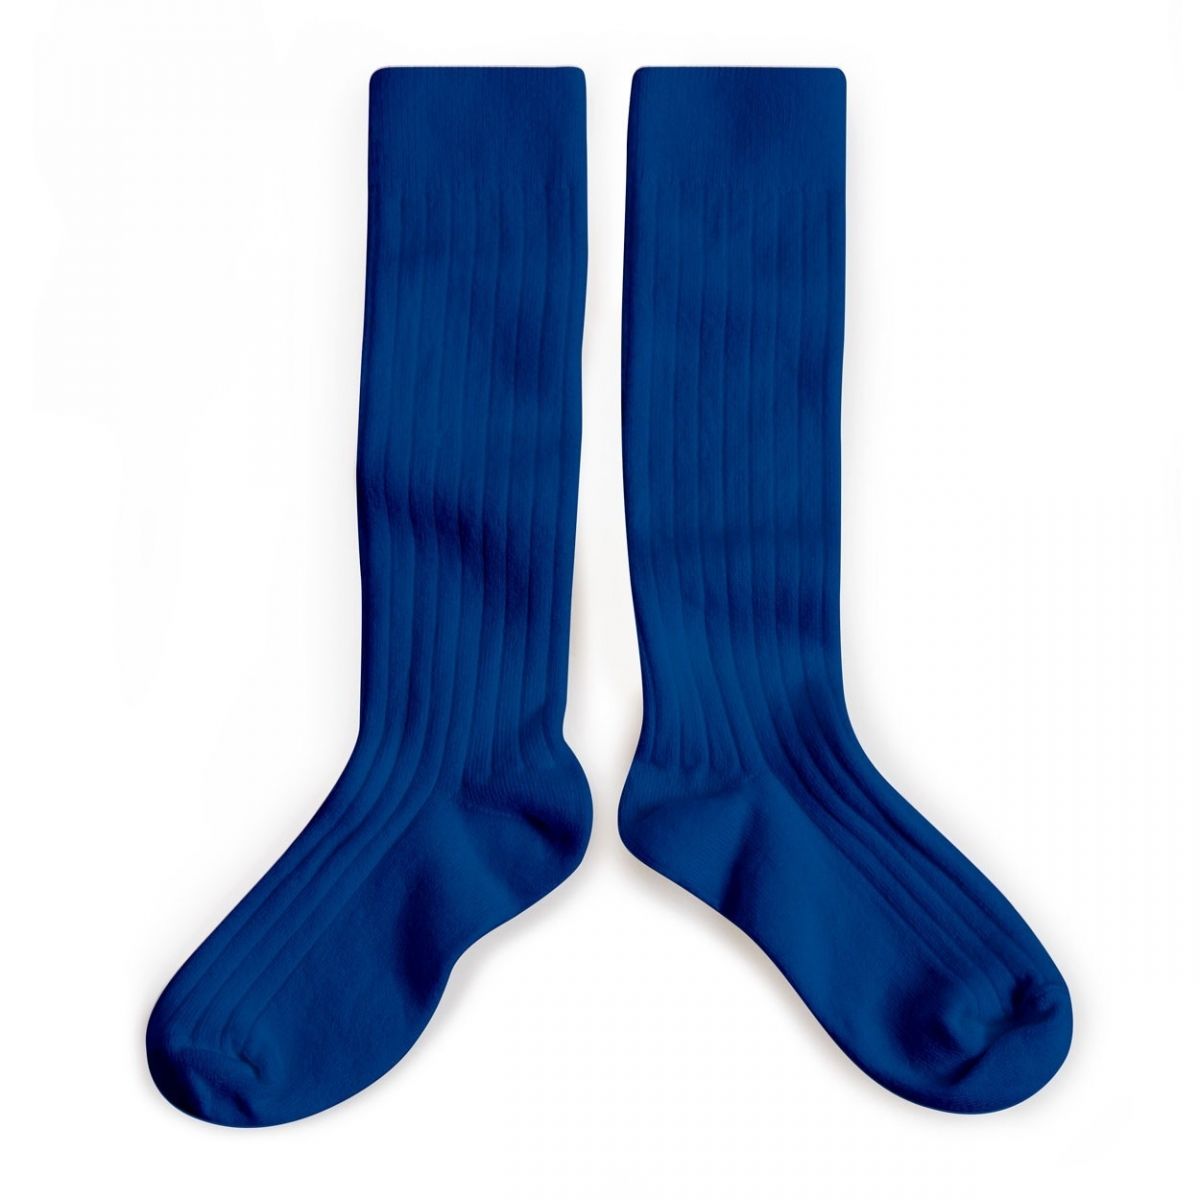 Collégien Knee high socks La Haute bleu eclatant 2950 218 La